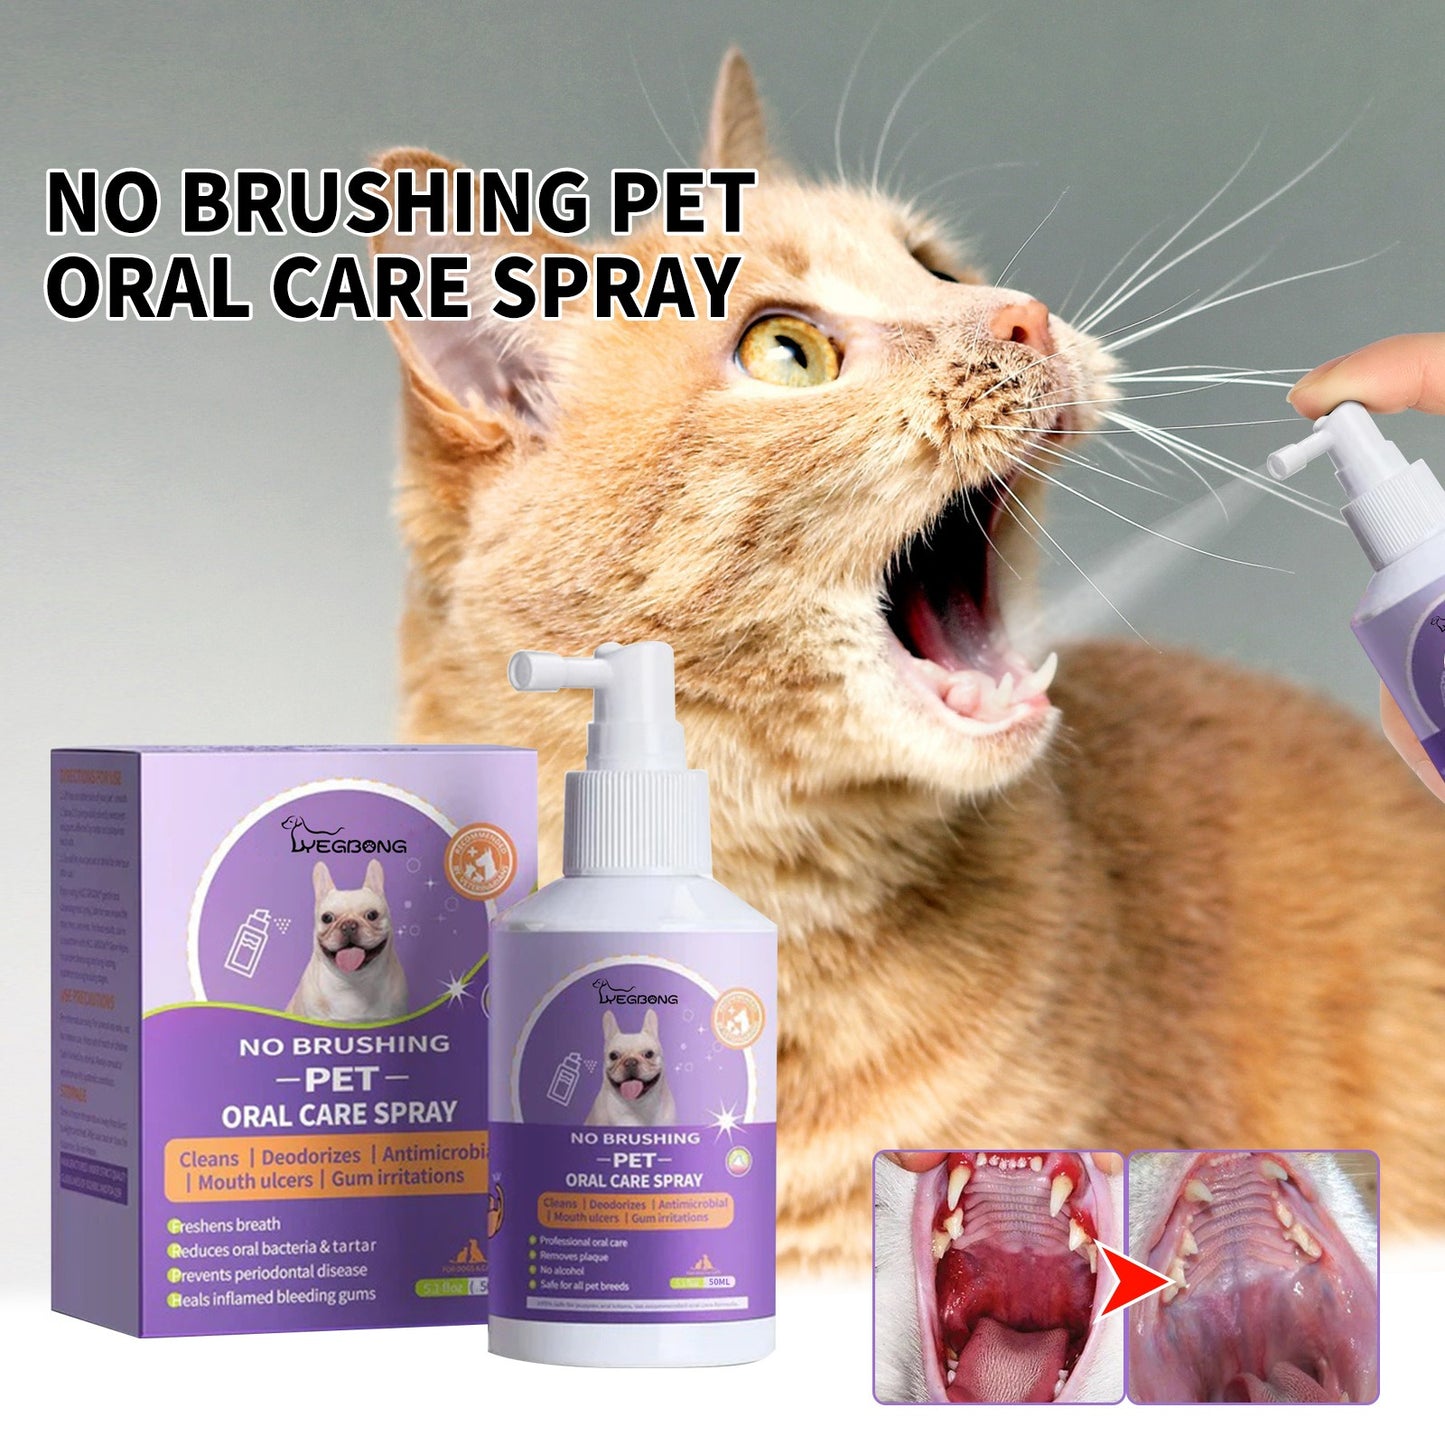 Yegbong Dog and Cat Teeth cleaning spray Pet Oral Cleaning Breath Fresh Deodorant Deodorant Deodorant